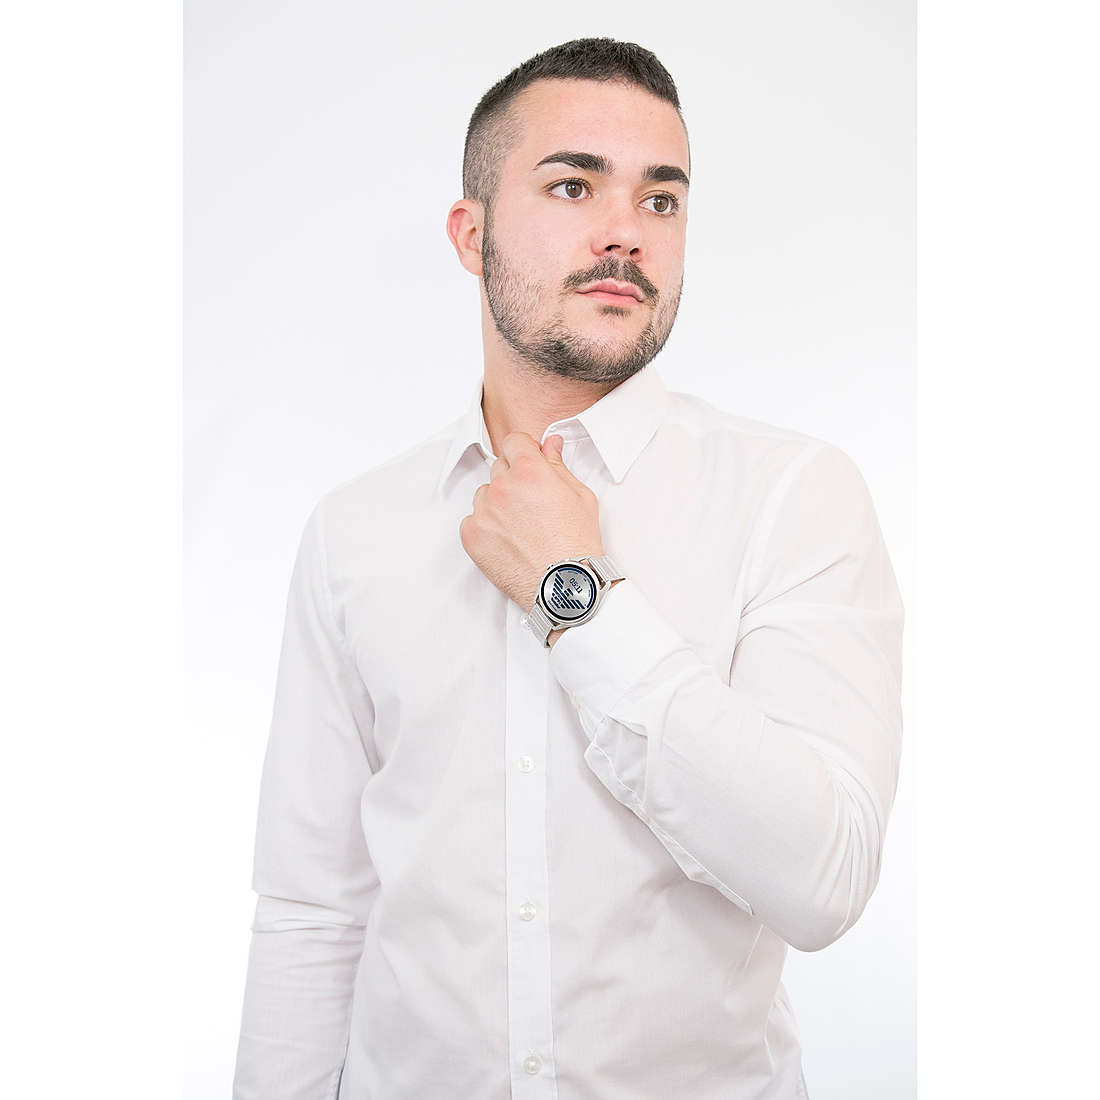 Emporio Armani Smartwatches man ART5026 wearing